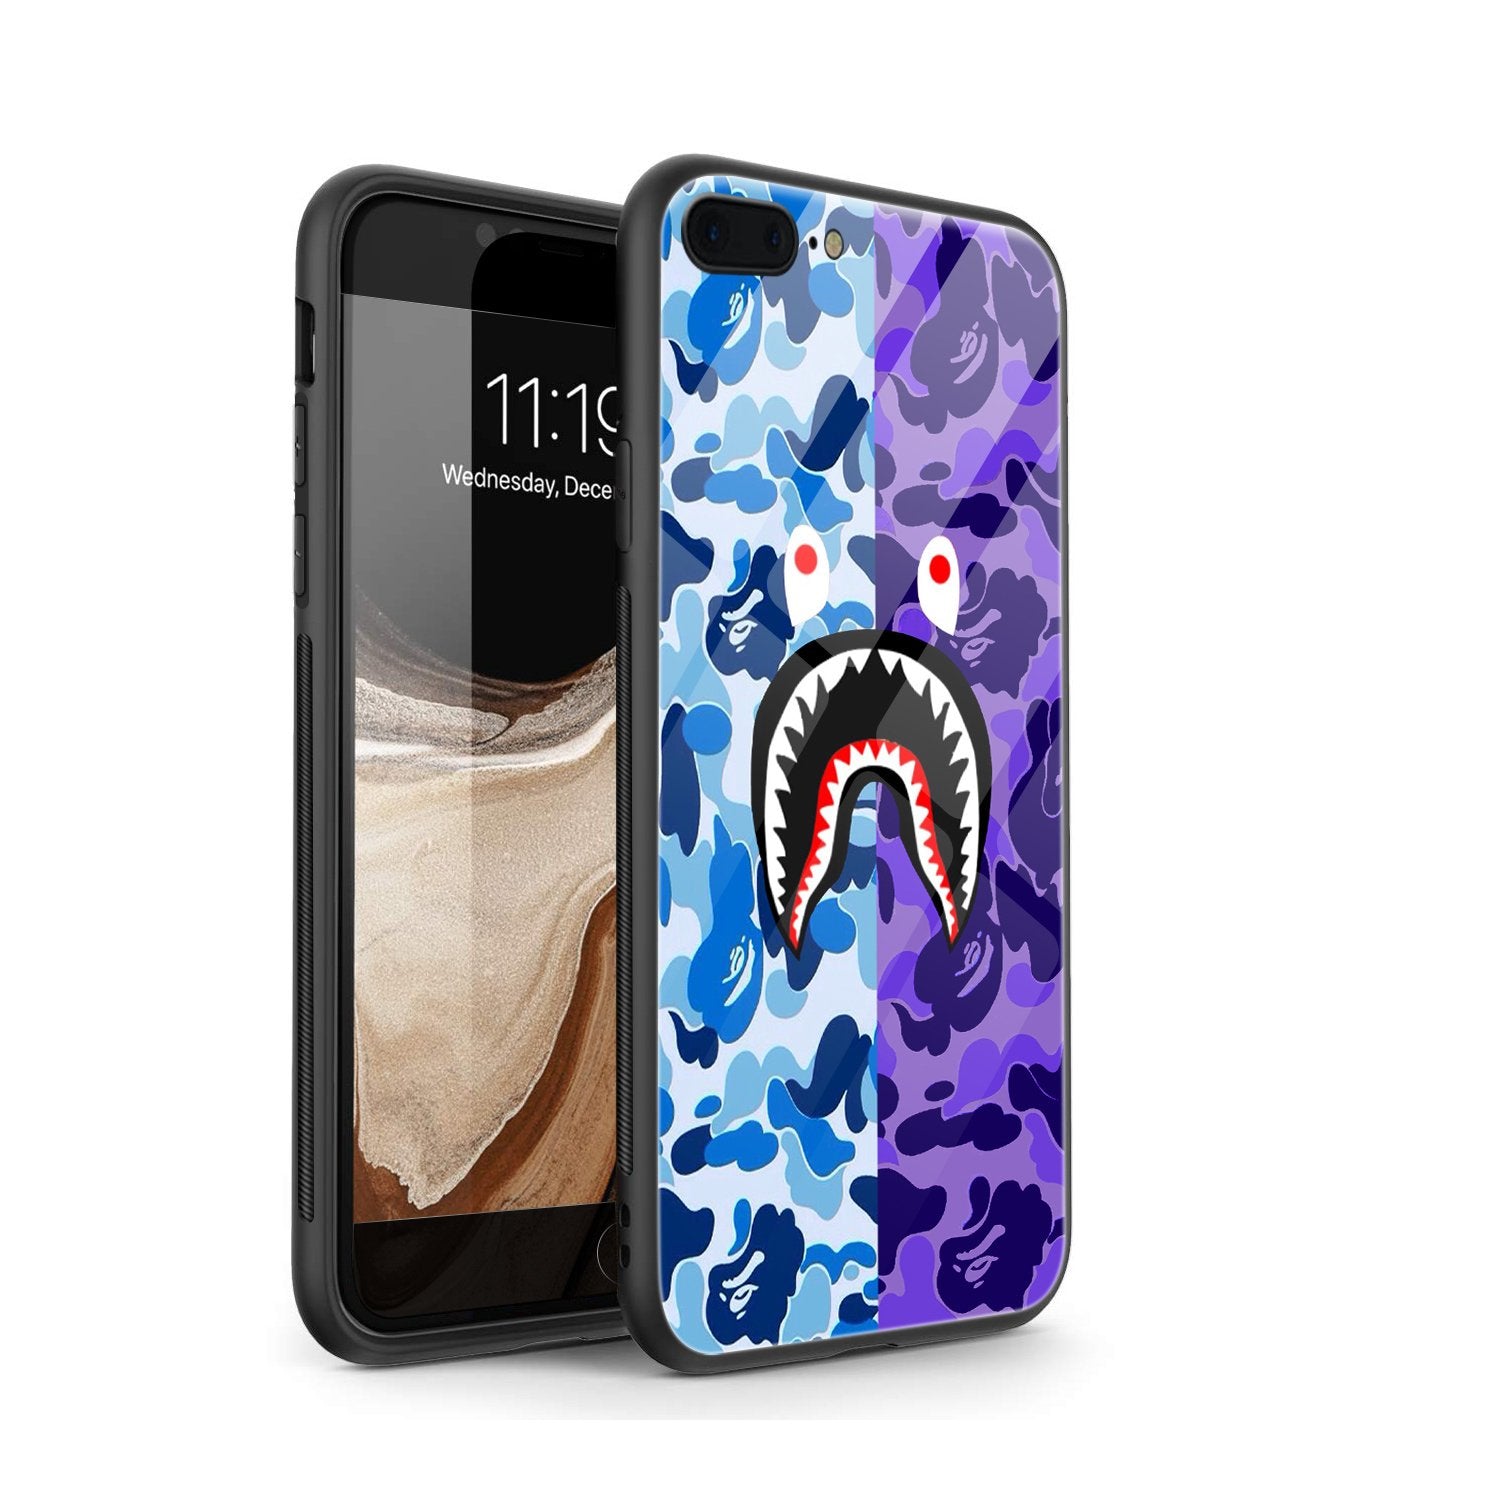 Blue/Purple Shark iPhone Case